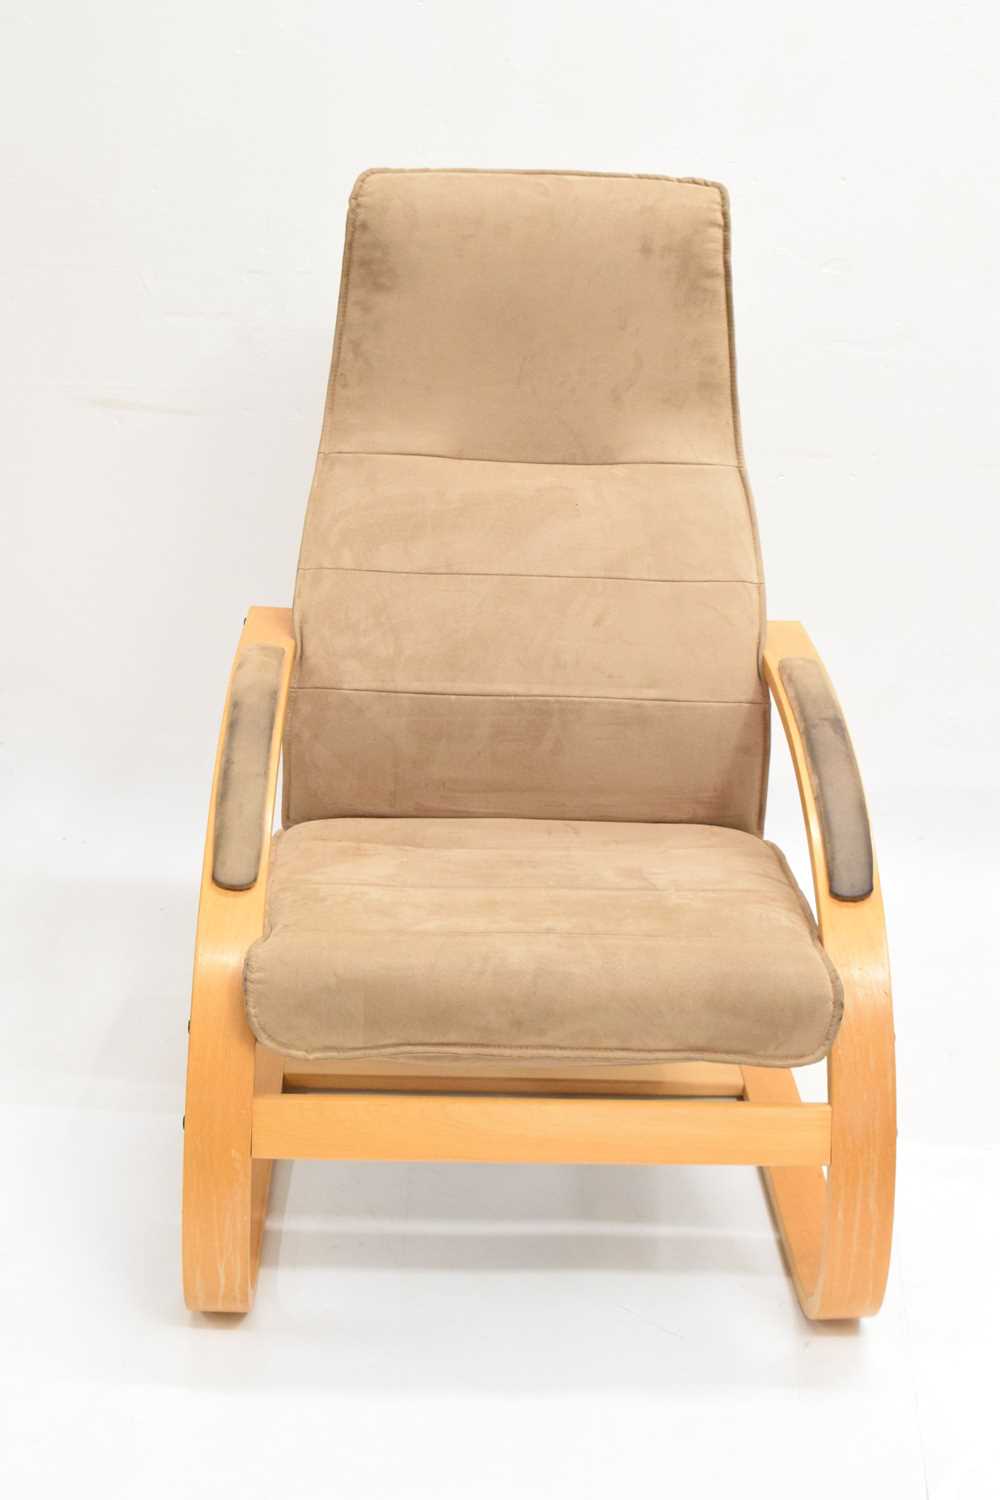 Contemporary Verikon (Denmark) armchair - Image 4 of 9